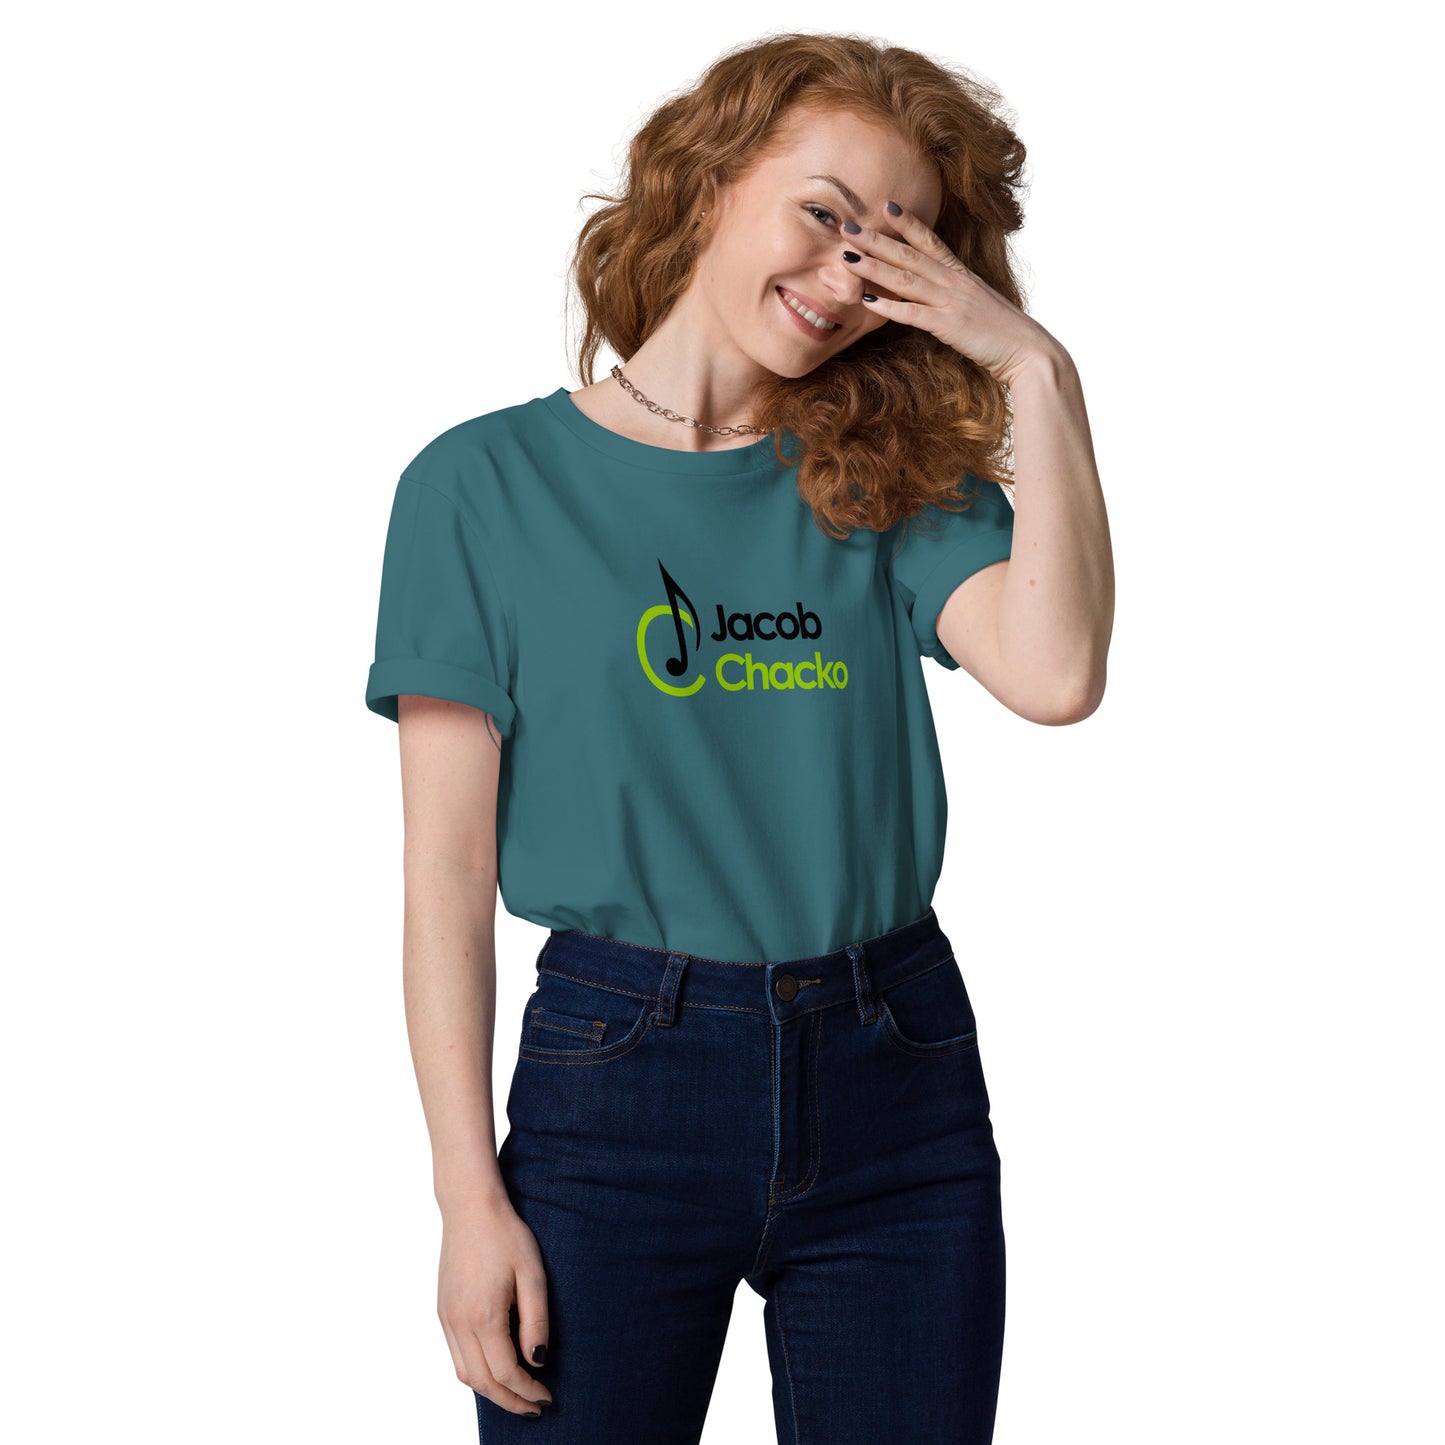 Unisex organic cotton t-shirt - Jacob Chacko